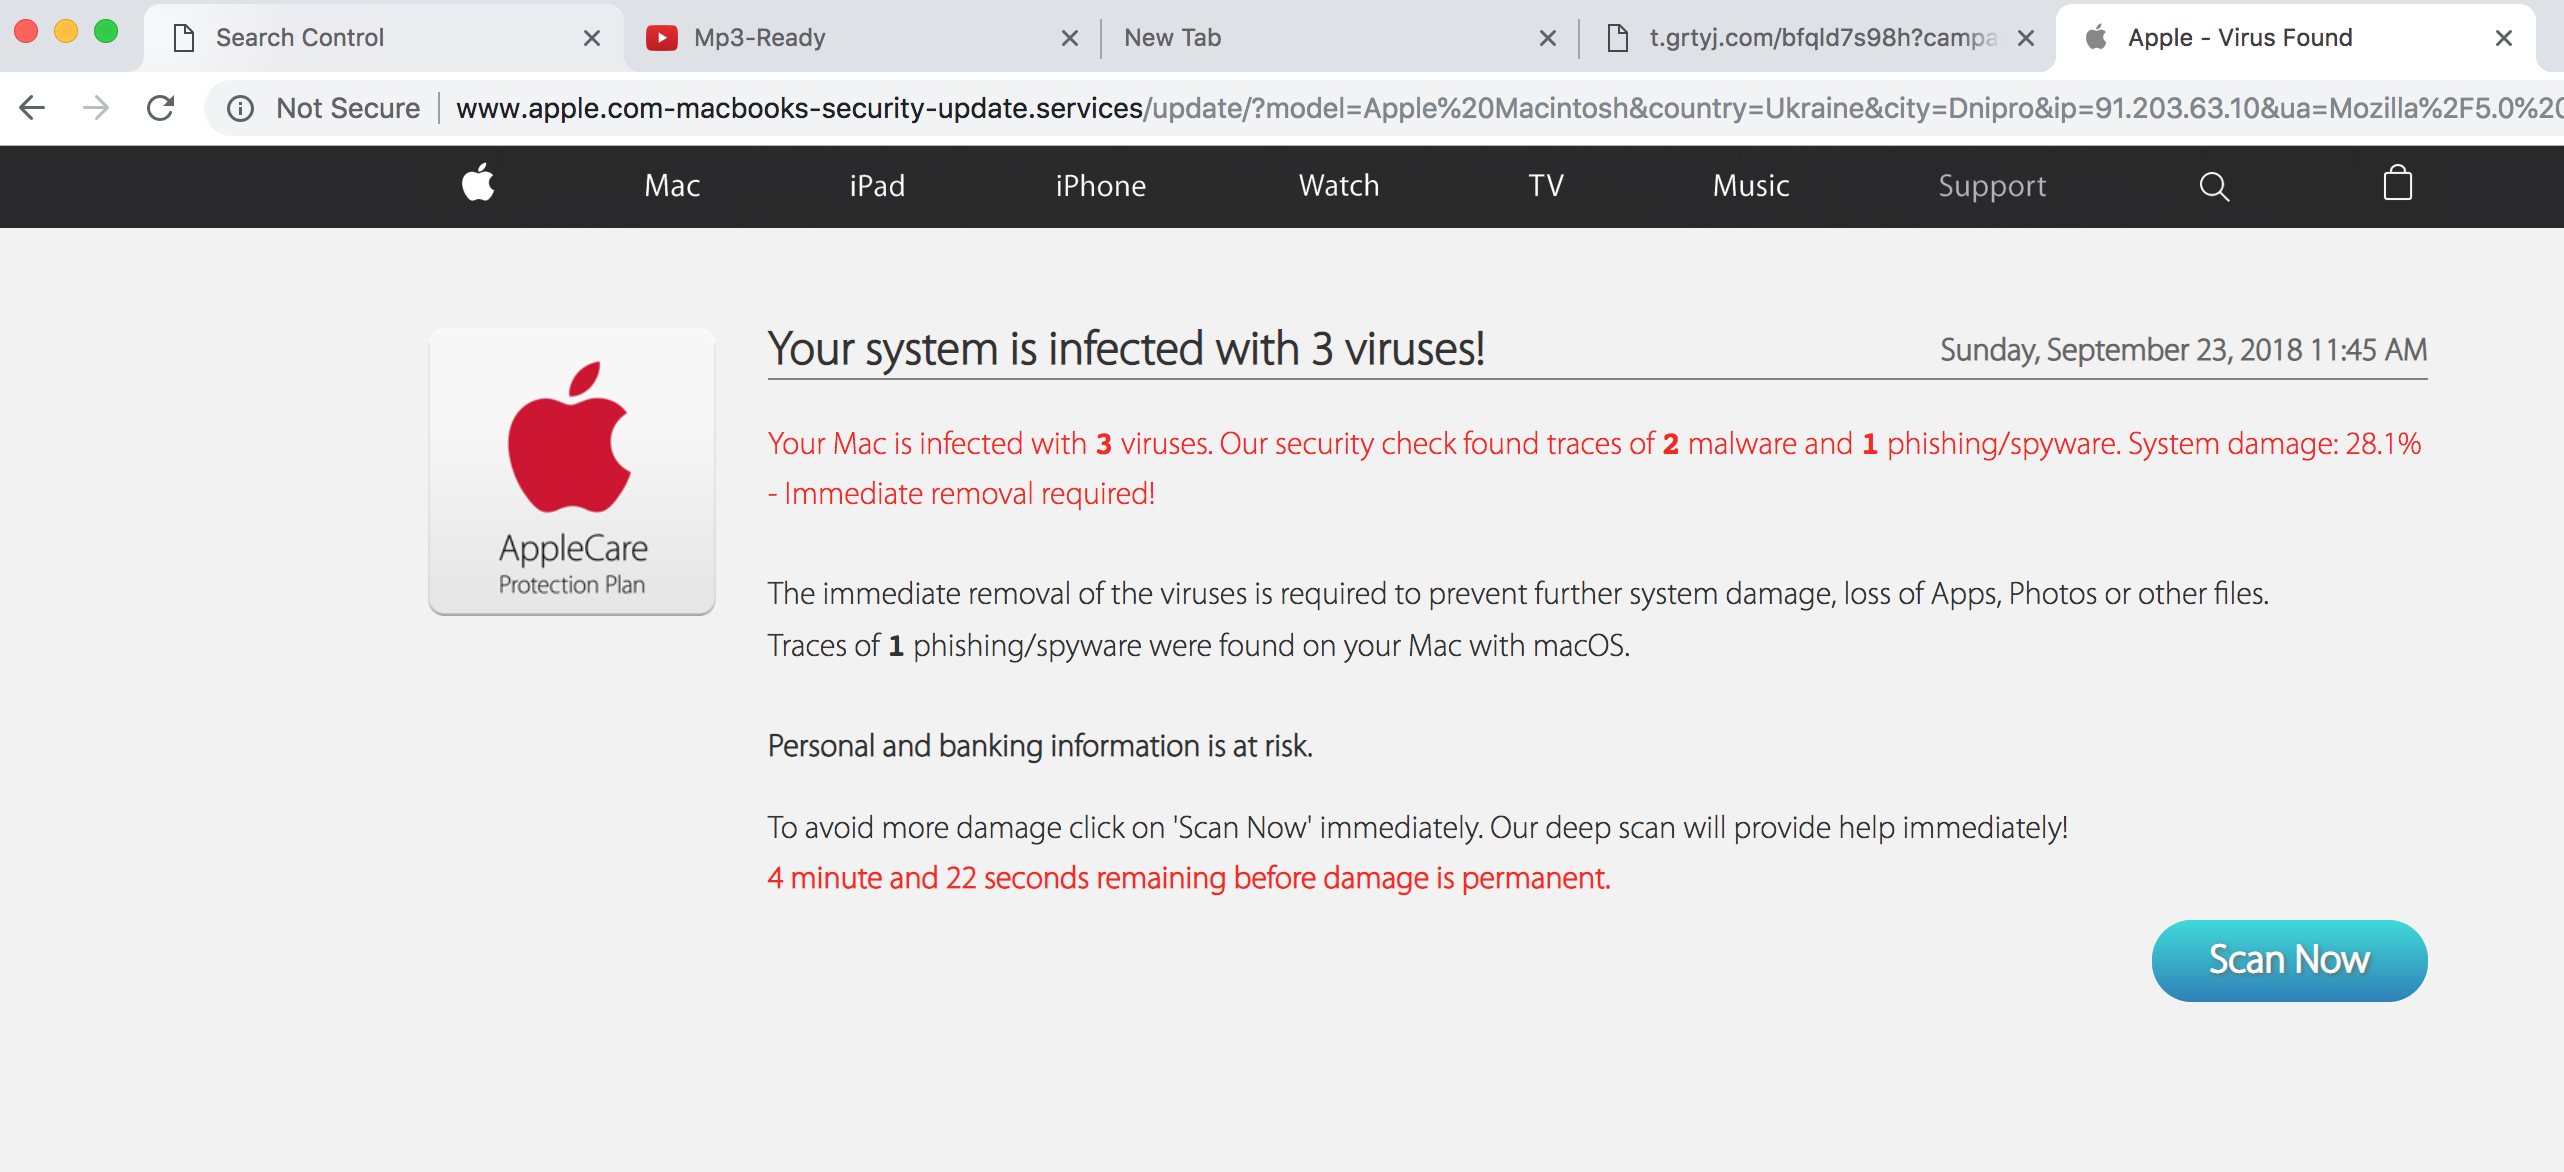 Apple.com-macbooks-security-update.services scam